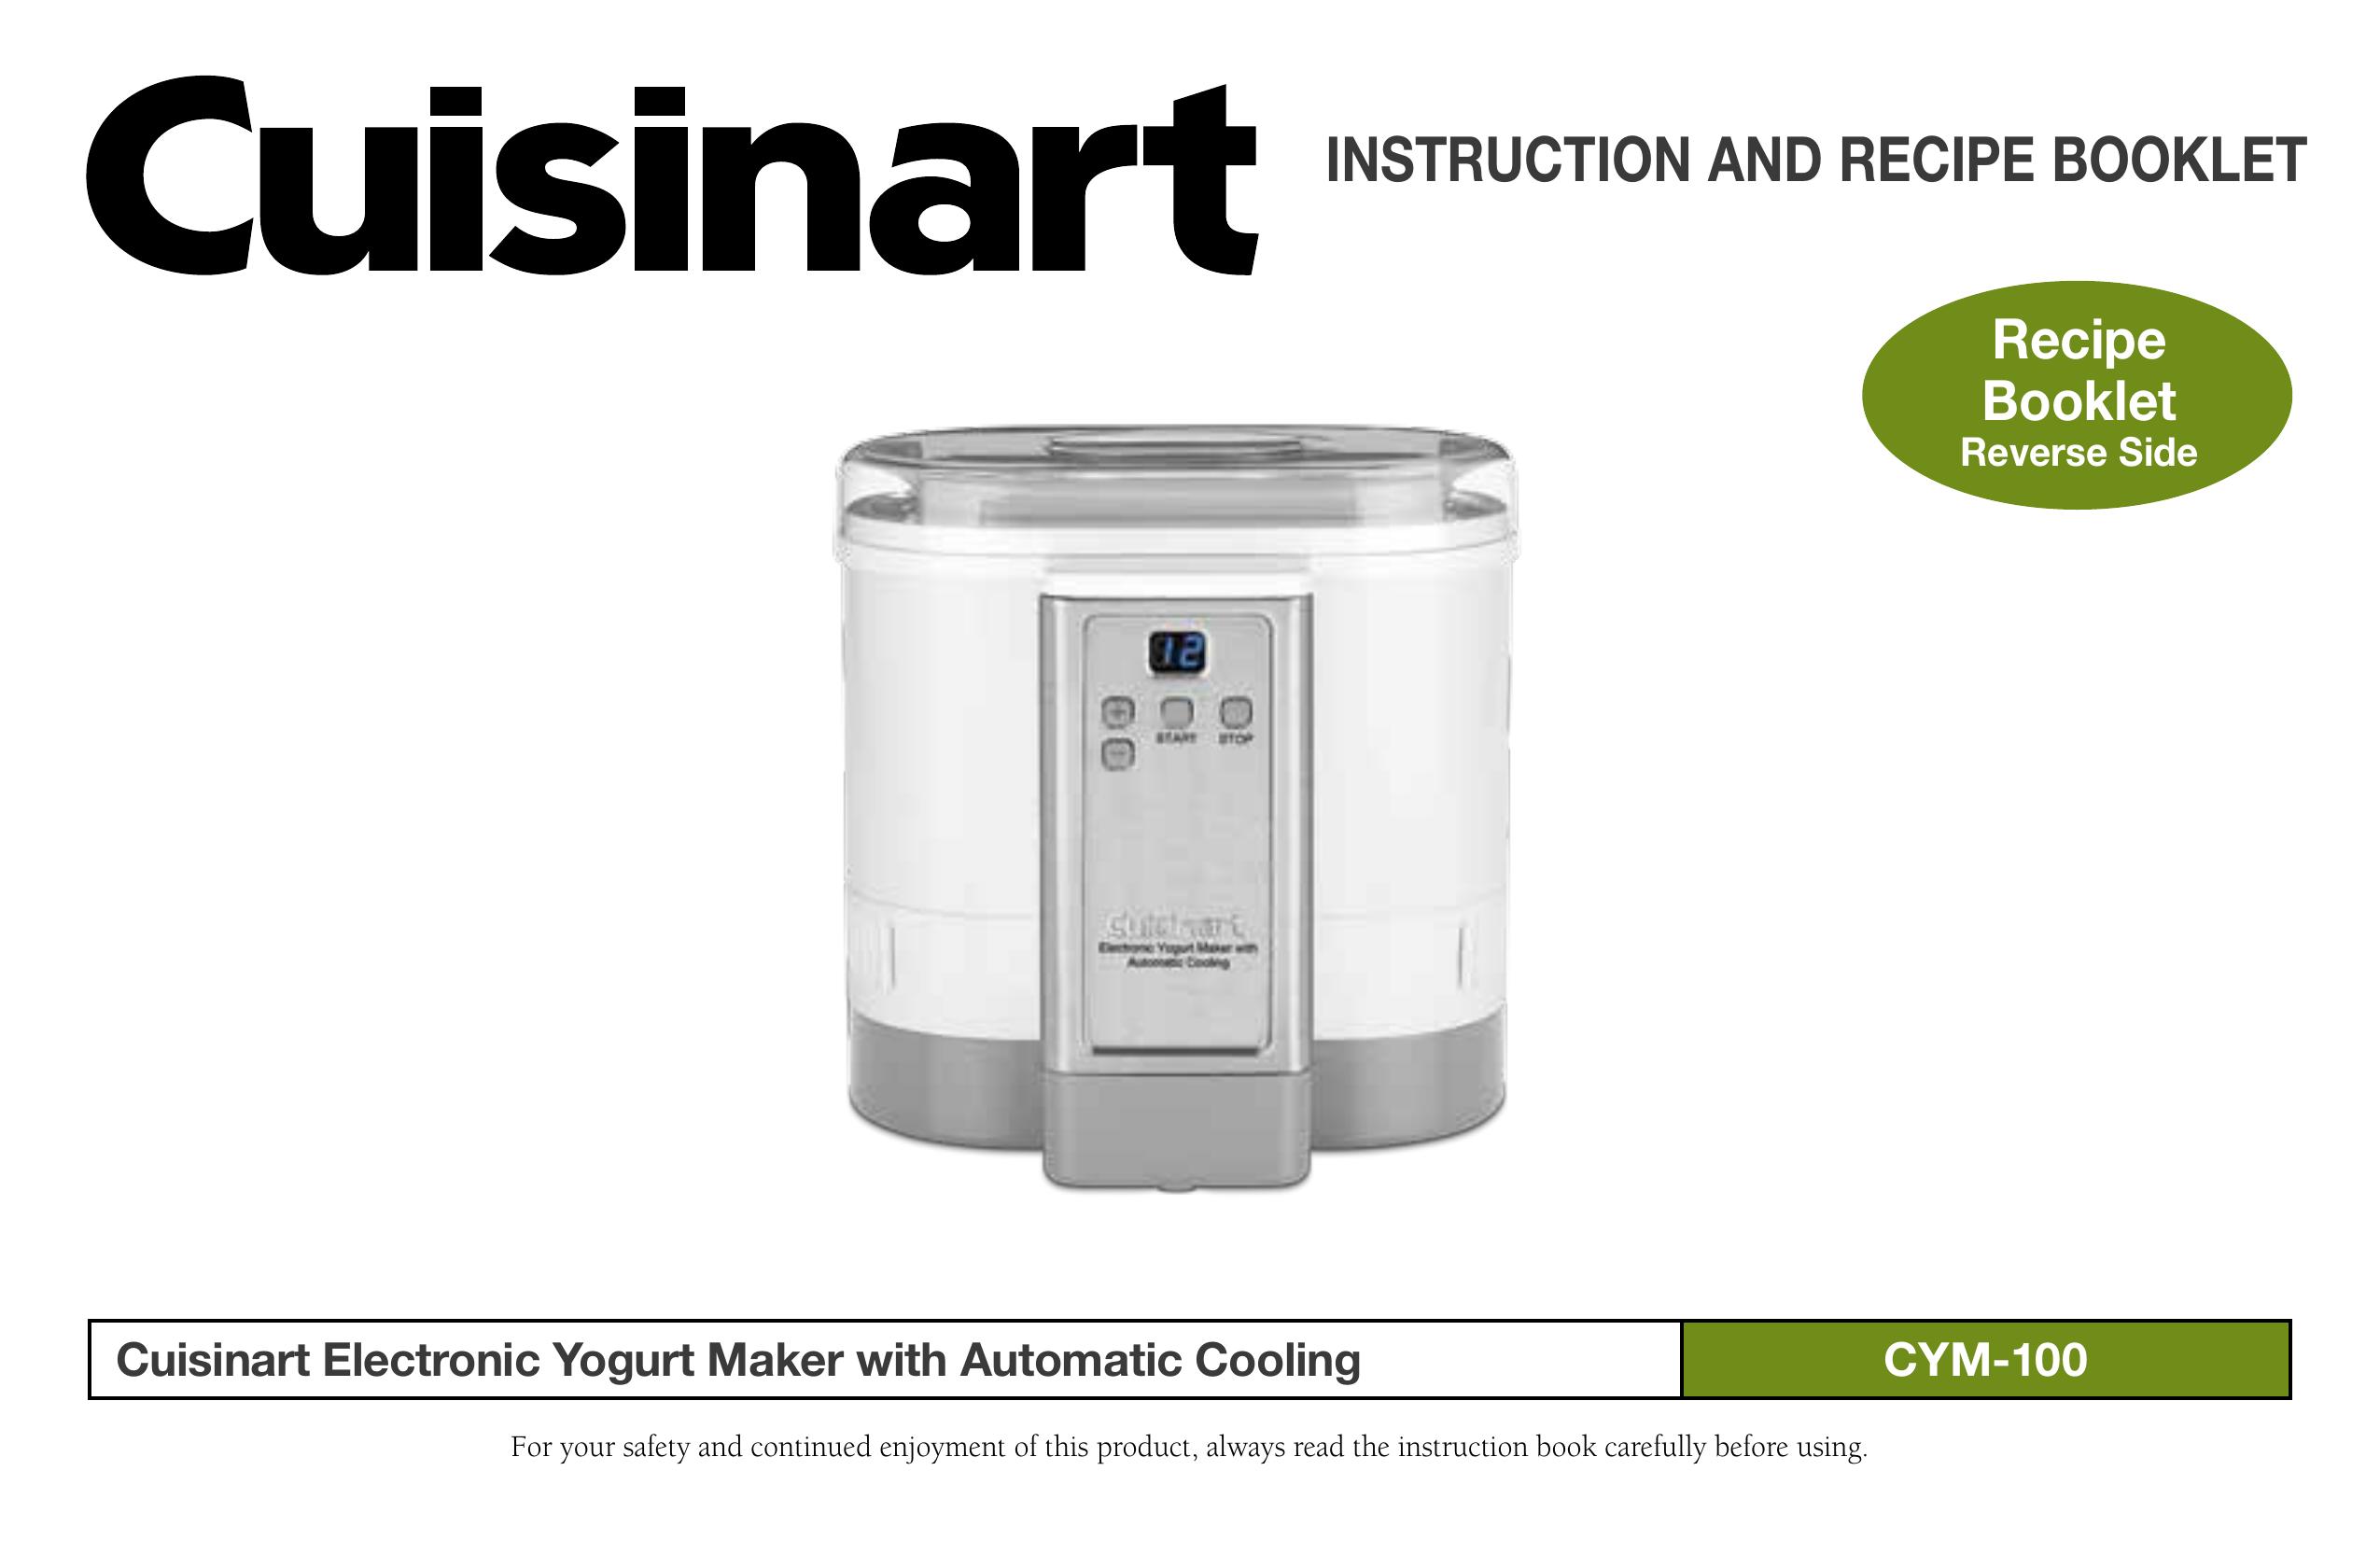 Cuisinart Cuisinart Electronic Yogurt Maker with Automatic Cooling Yogurt Maker User Manual